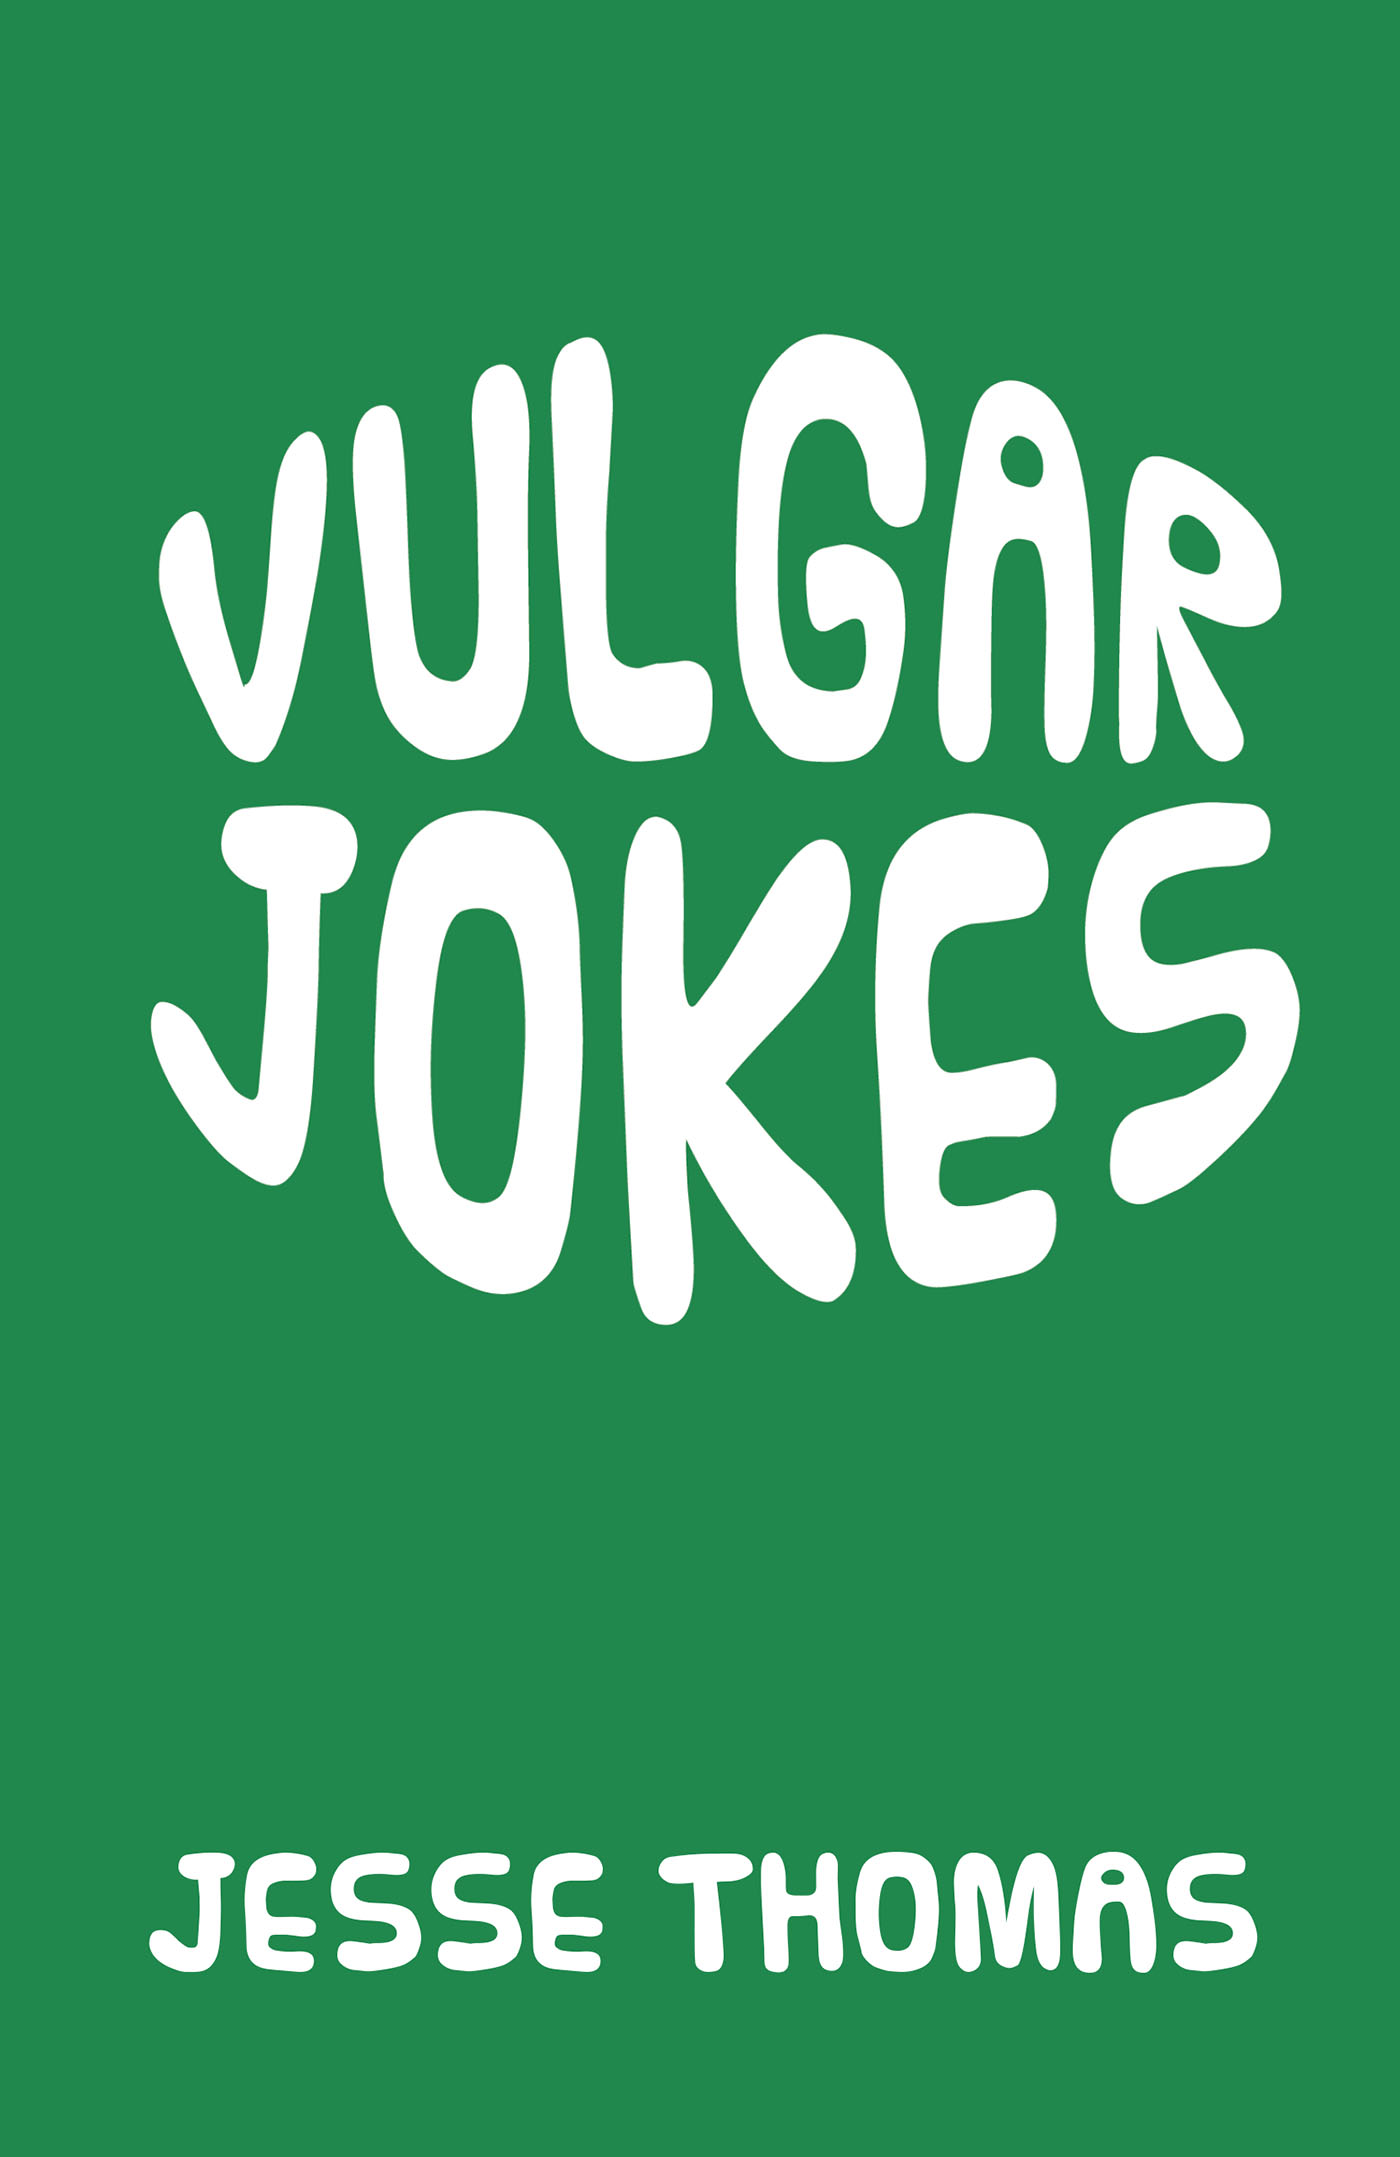 VULGAR JOKES Cover Image